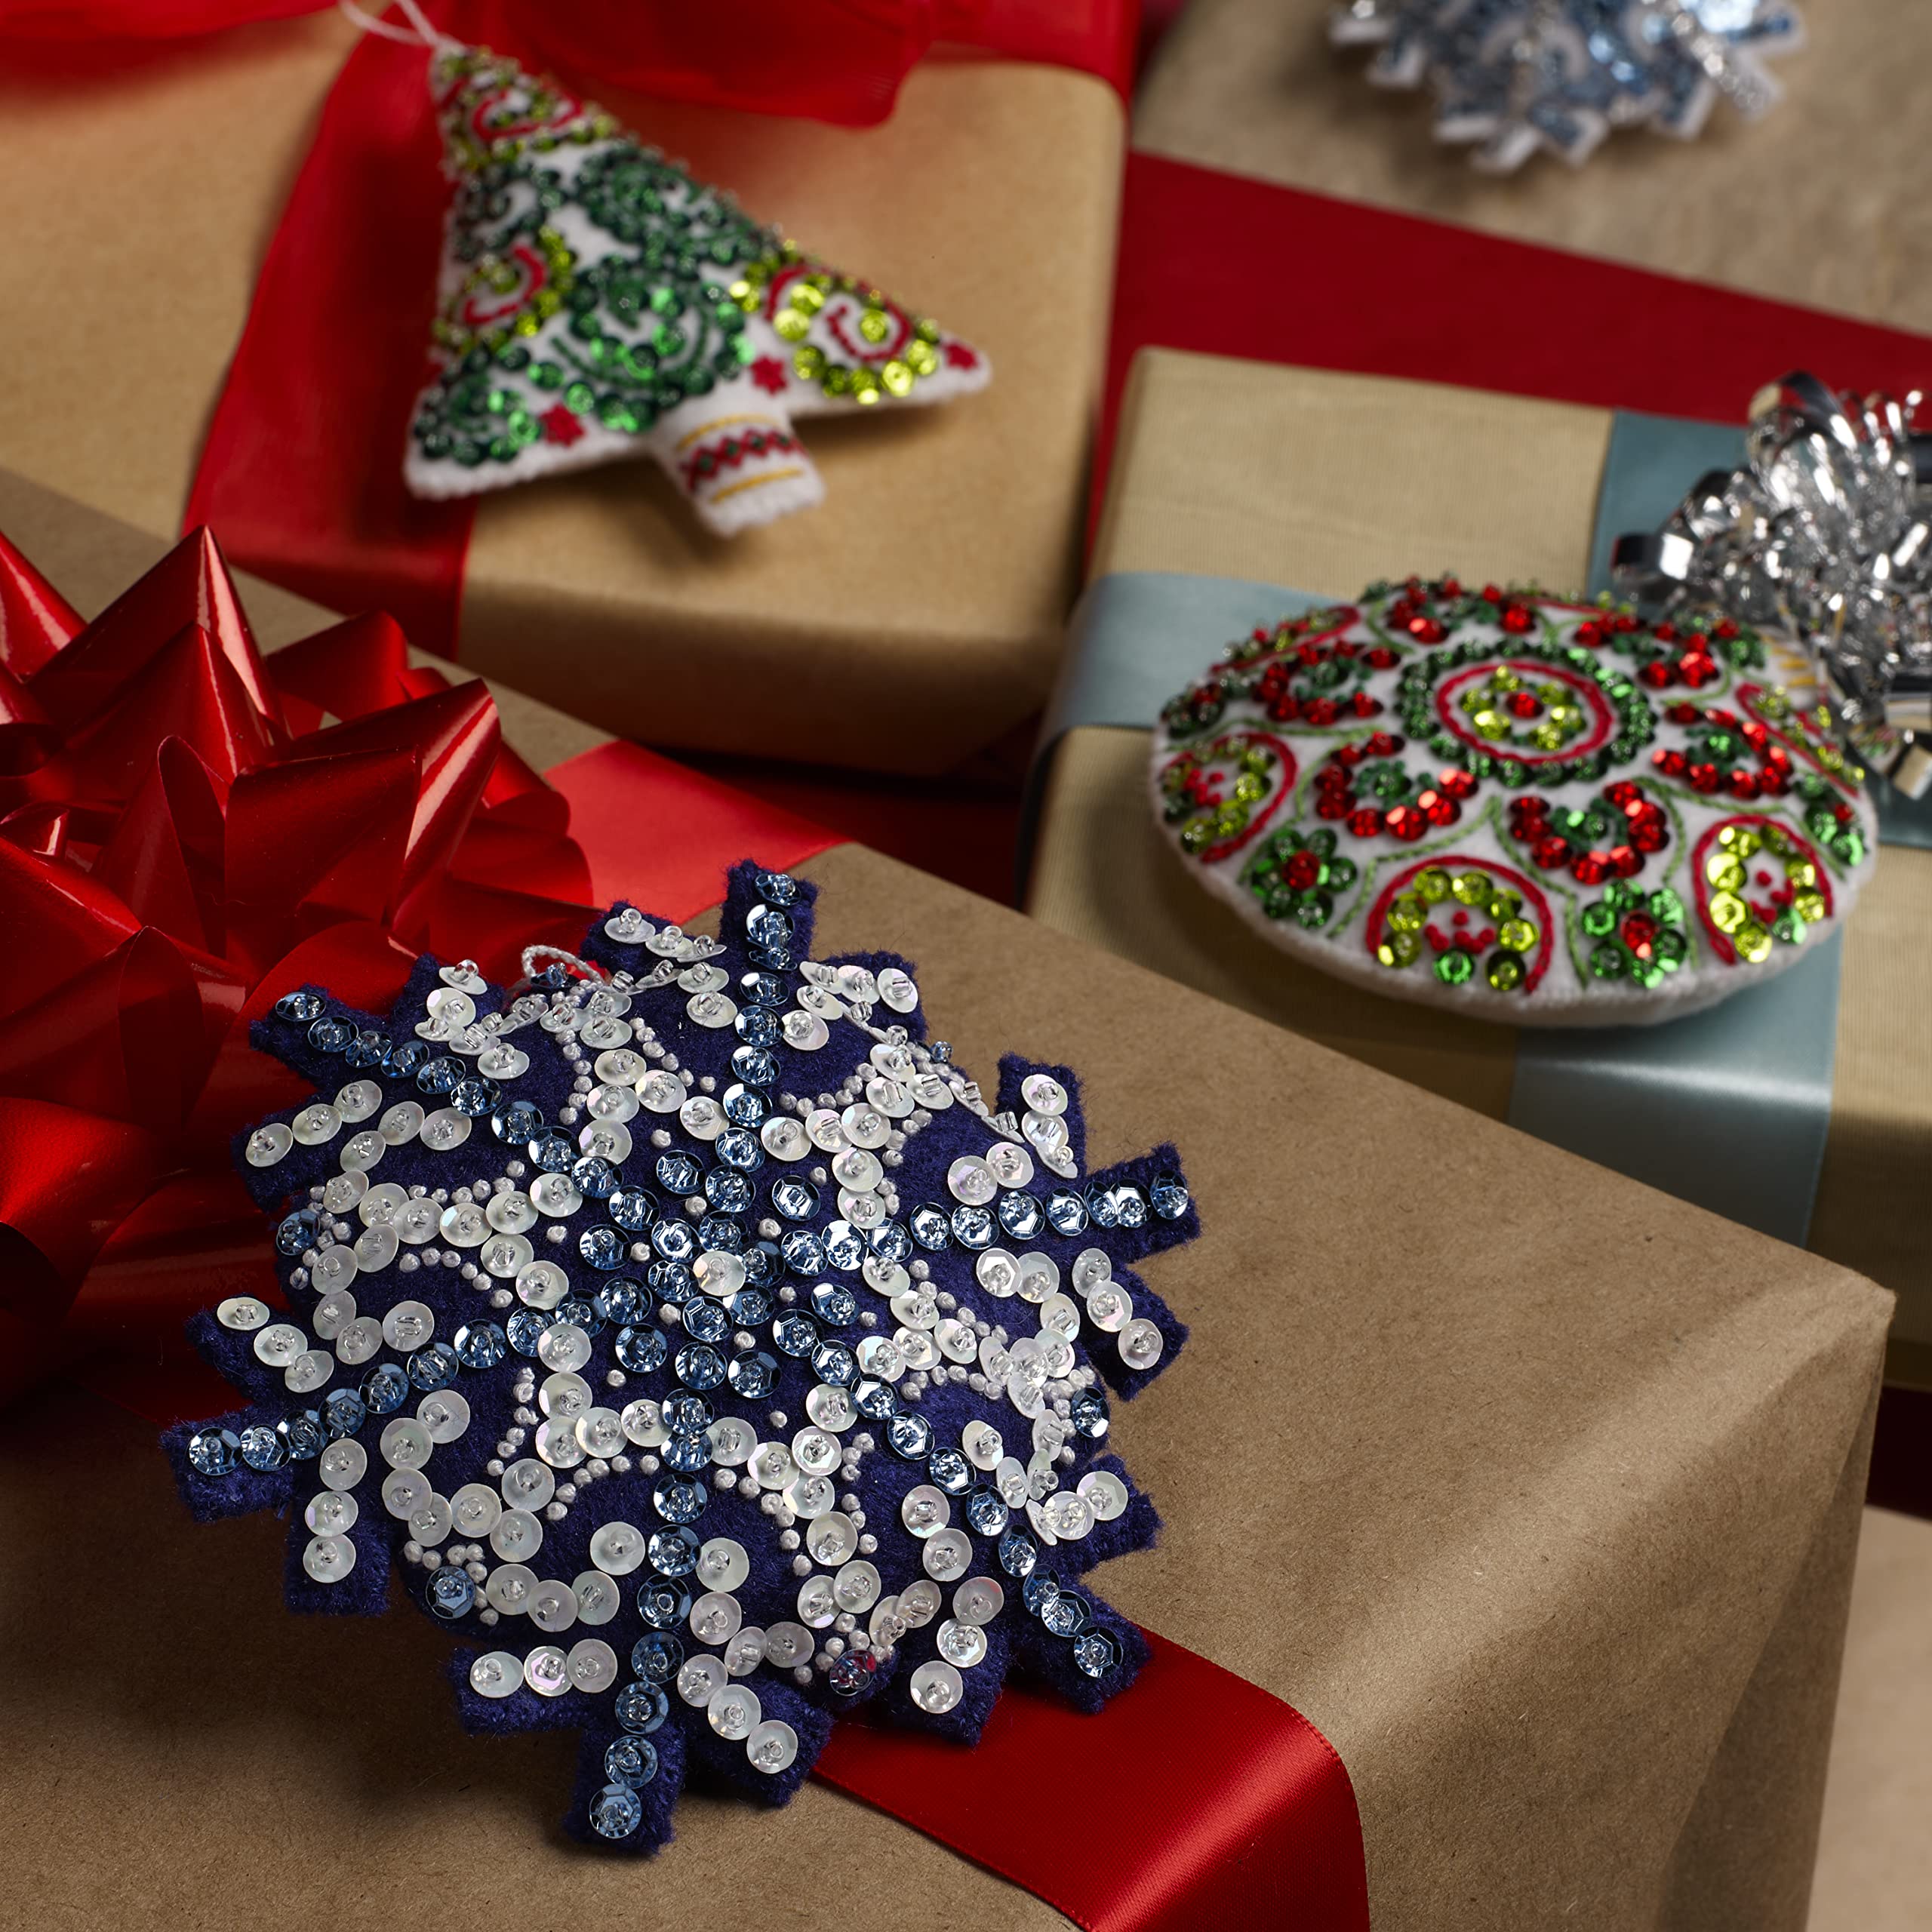 Bucilla Felt Applique 6 Piece Ornament Making Kit, Mandala Christmas, Perfect for DIY Arts and Crafts, 89499E